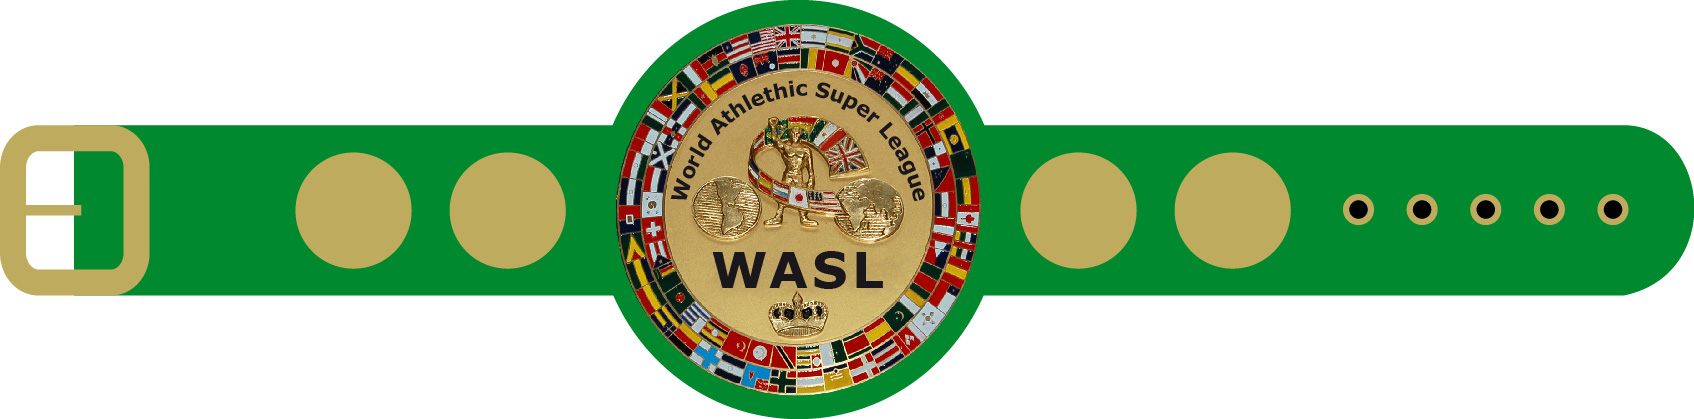 WASL - World Athletic Super League Champion Grtel